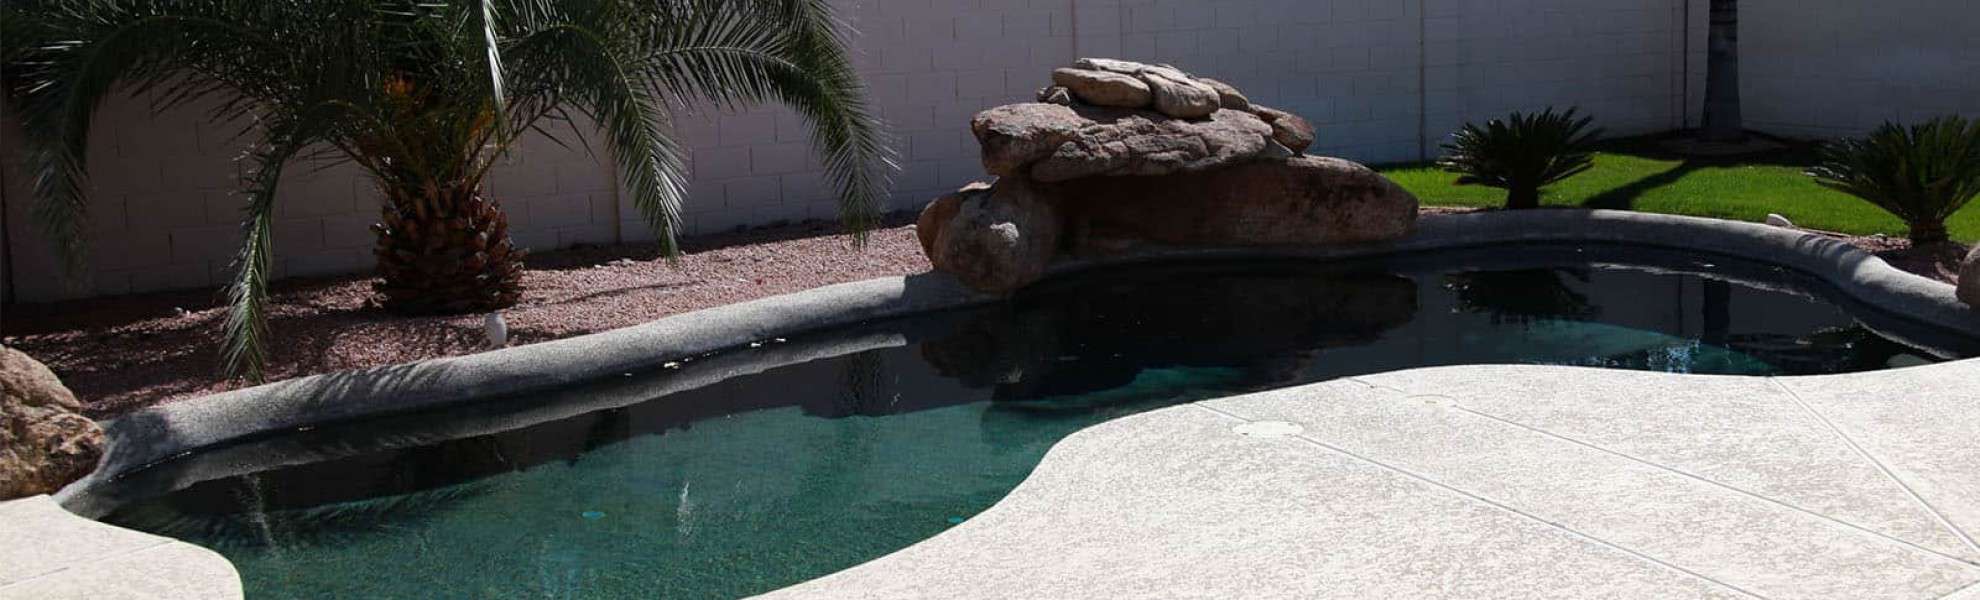 ASP Swimming Pool Remodel | Before Photo | Shasta Pools & Spas